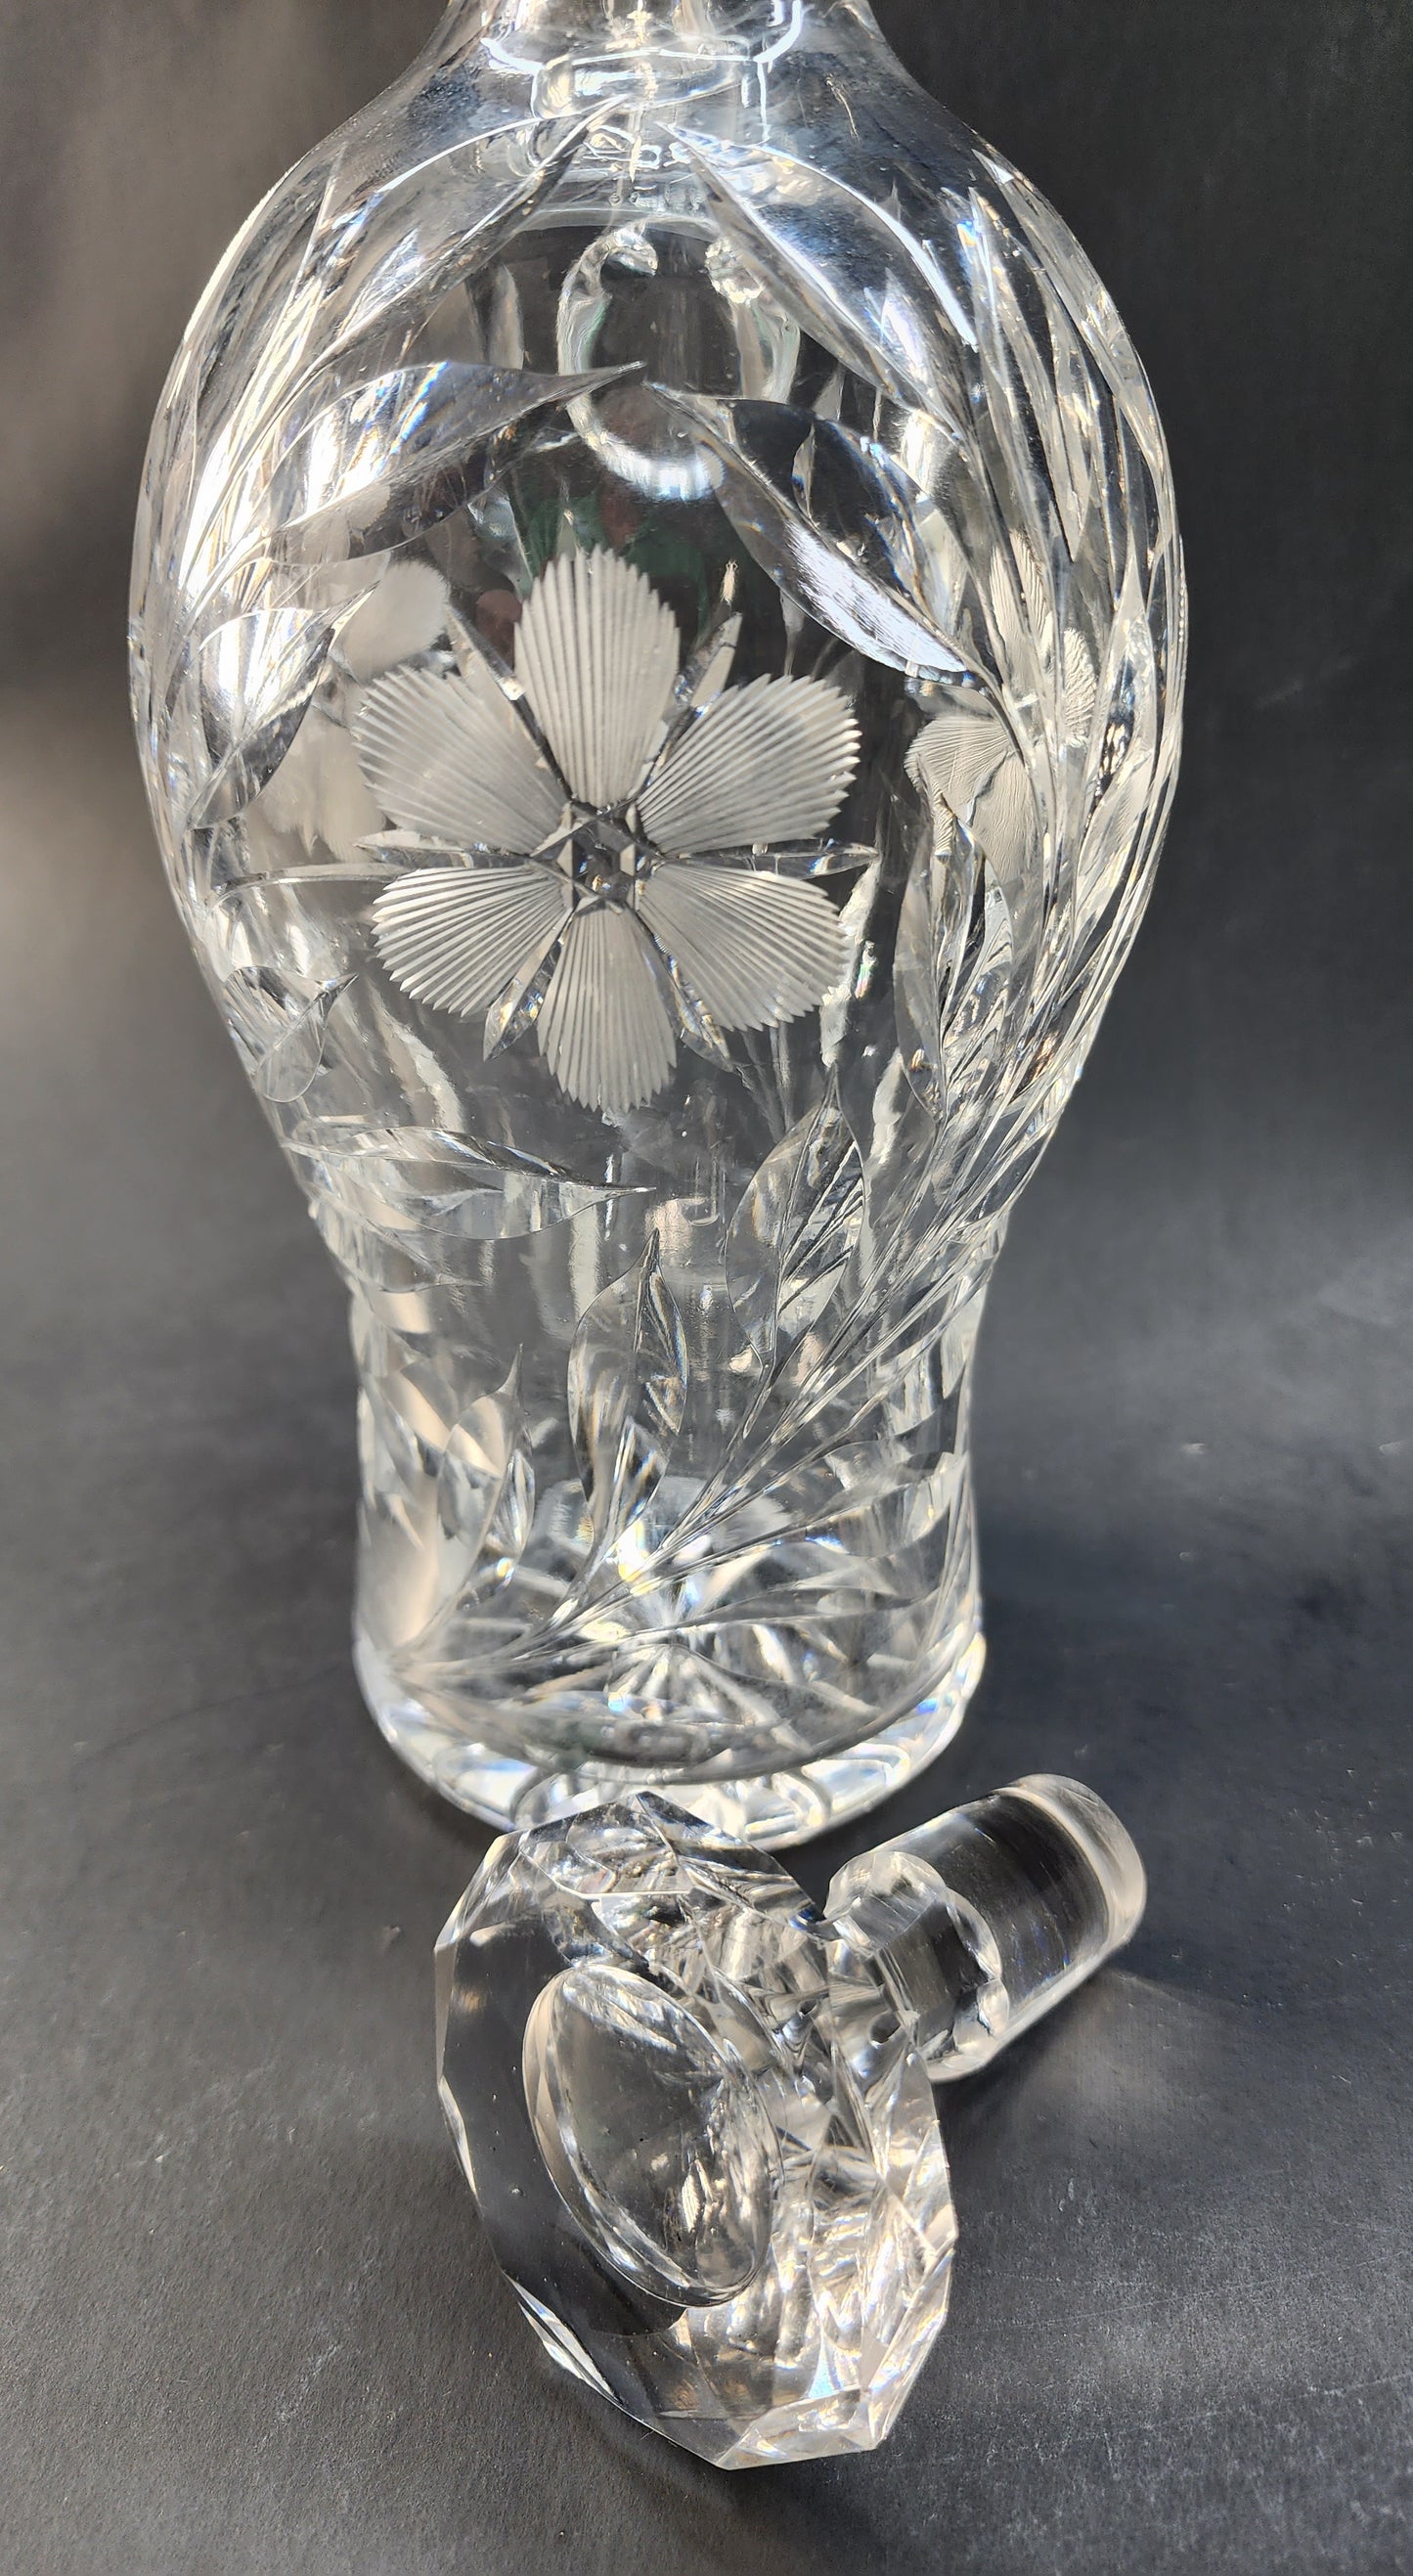 Cut glass handled vintage decanter